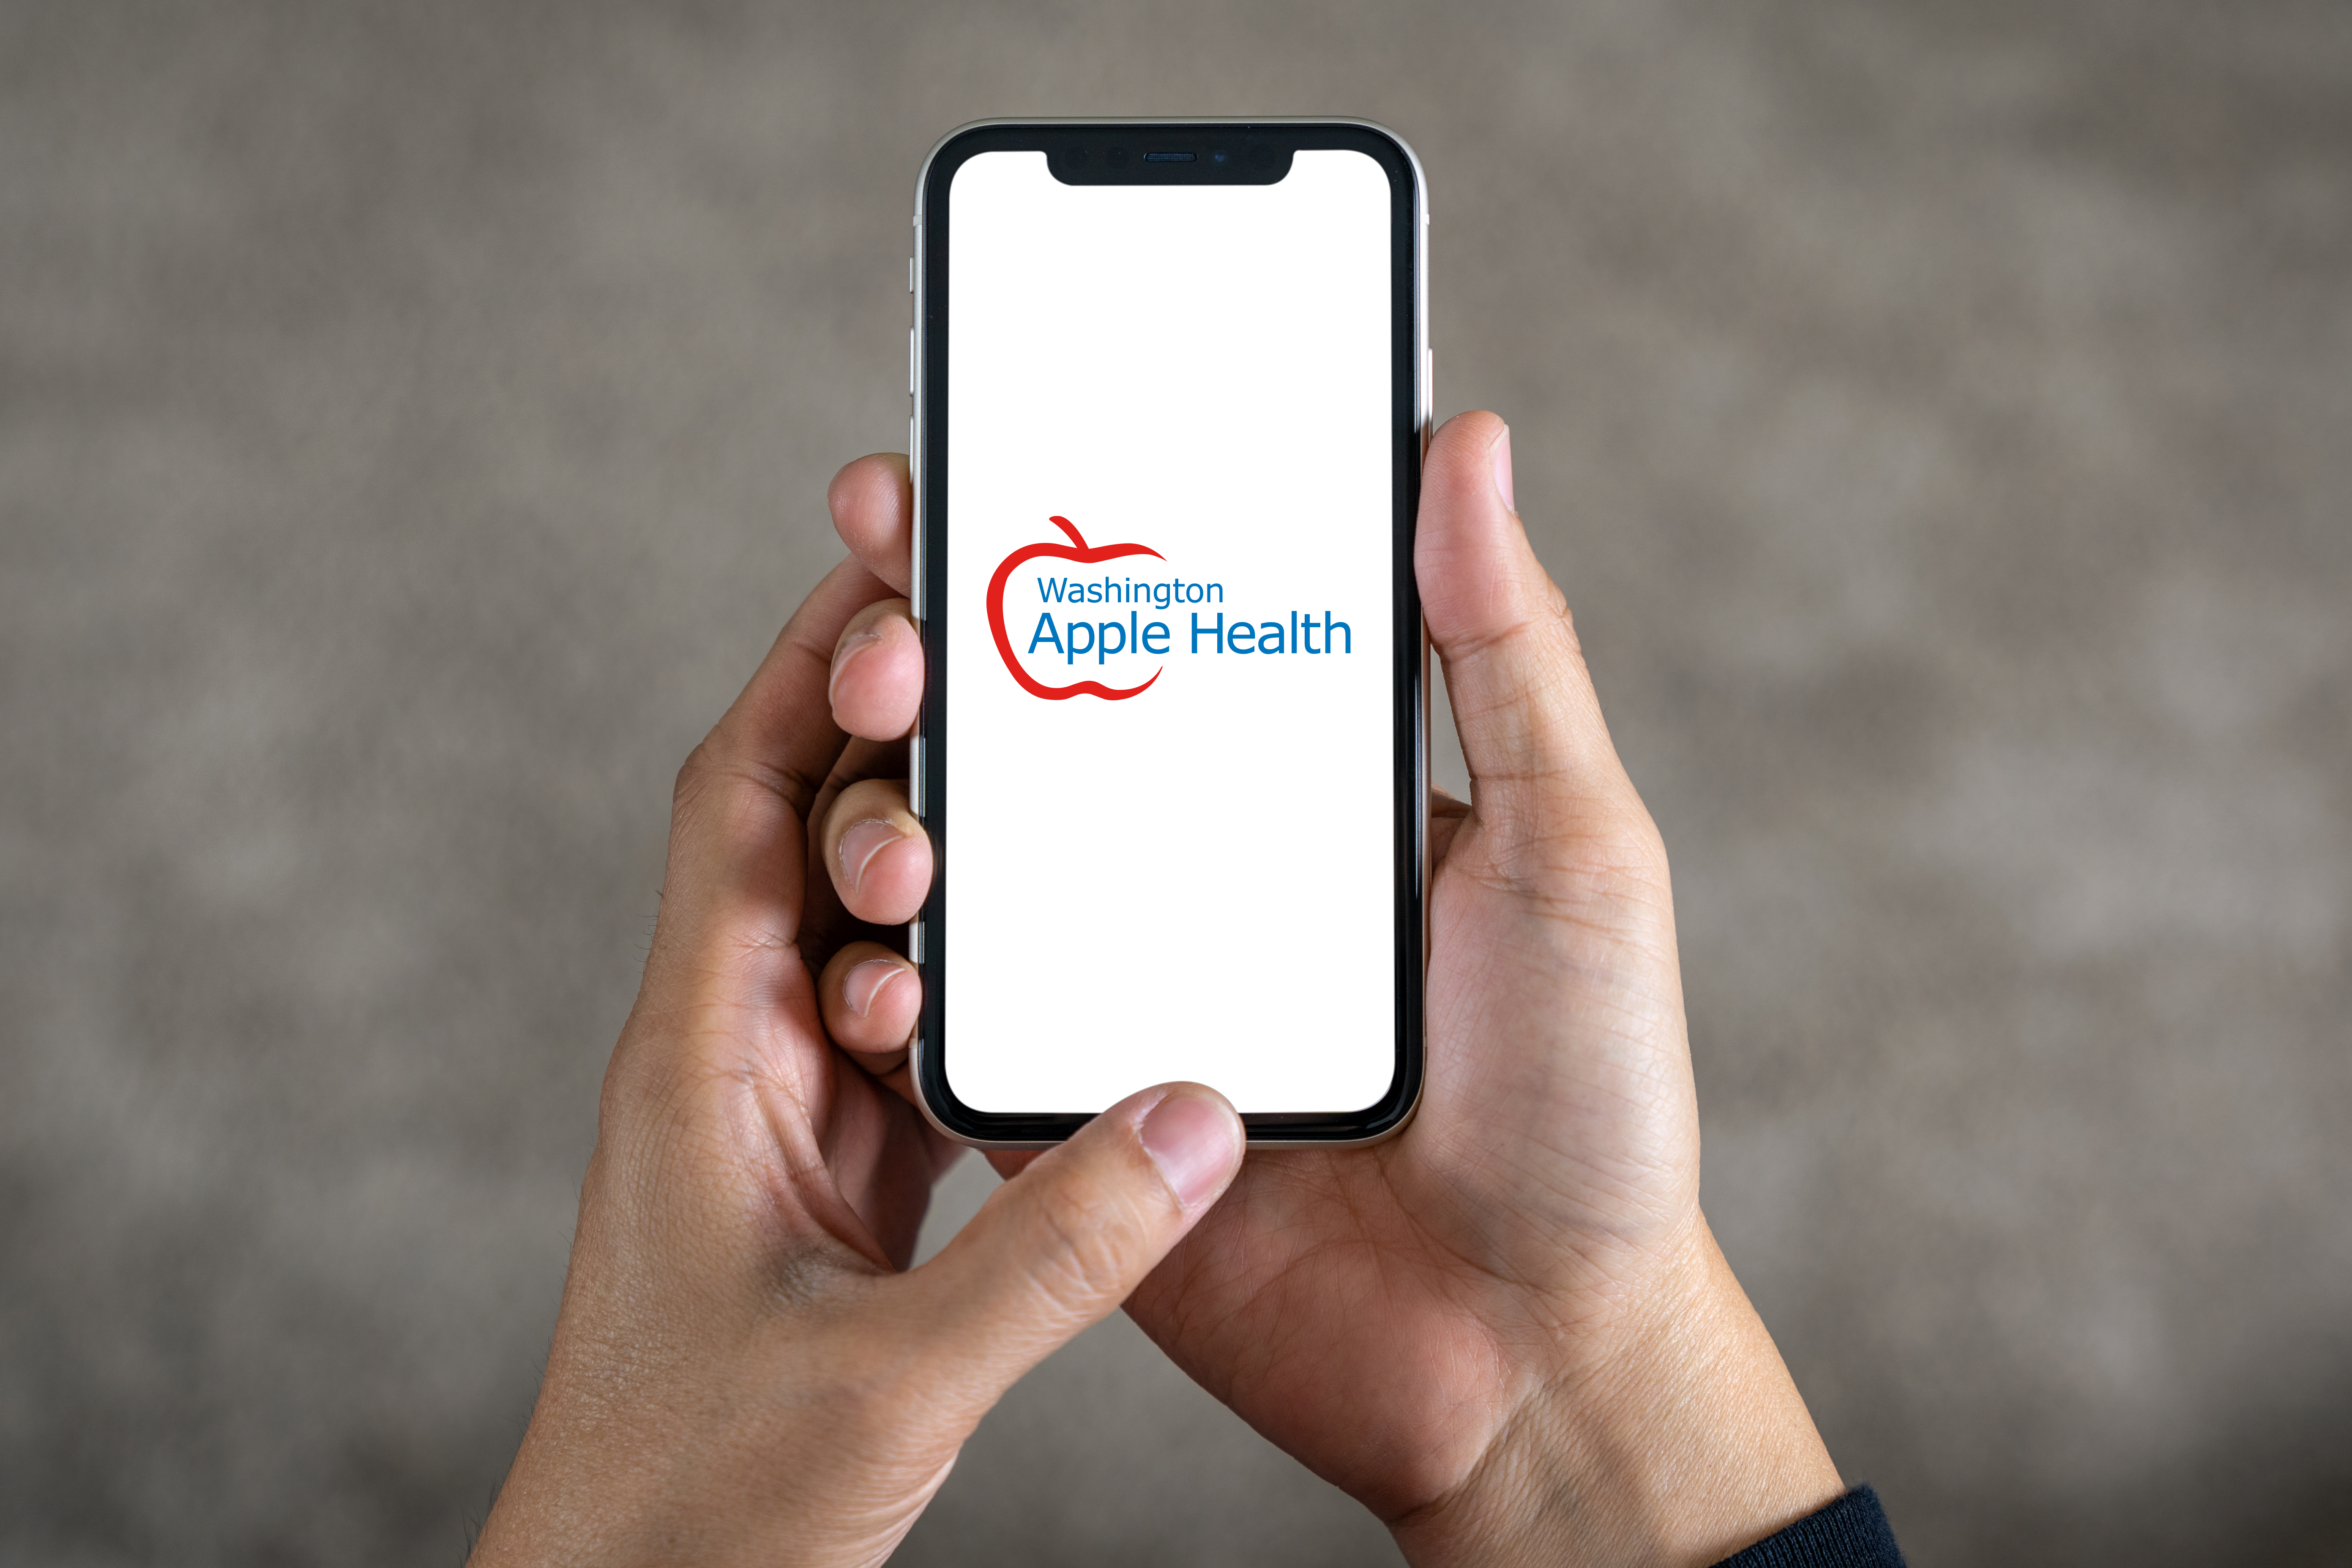 Washington Apple Health logo on a cellphone.